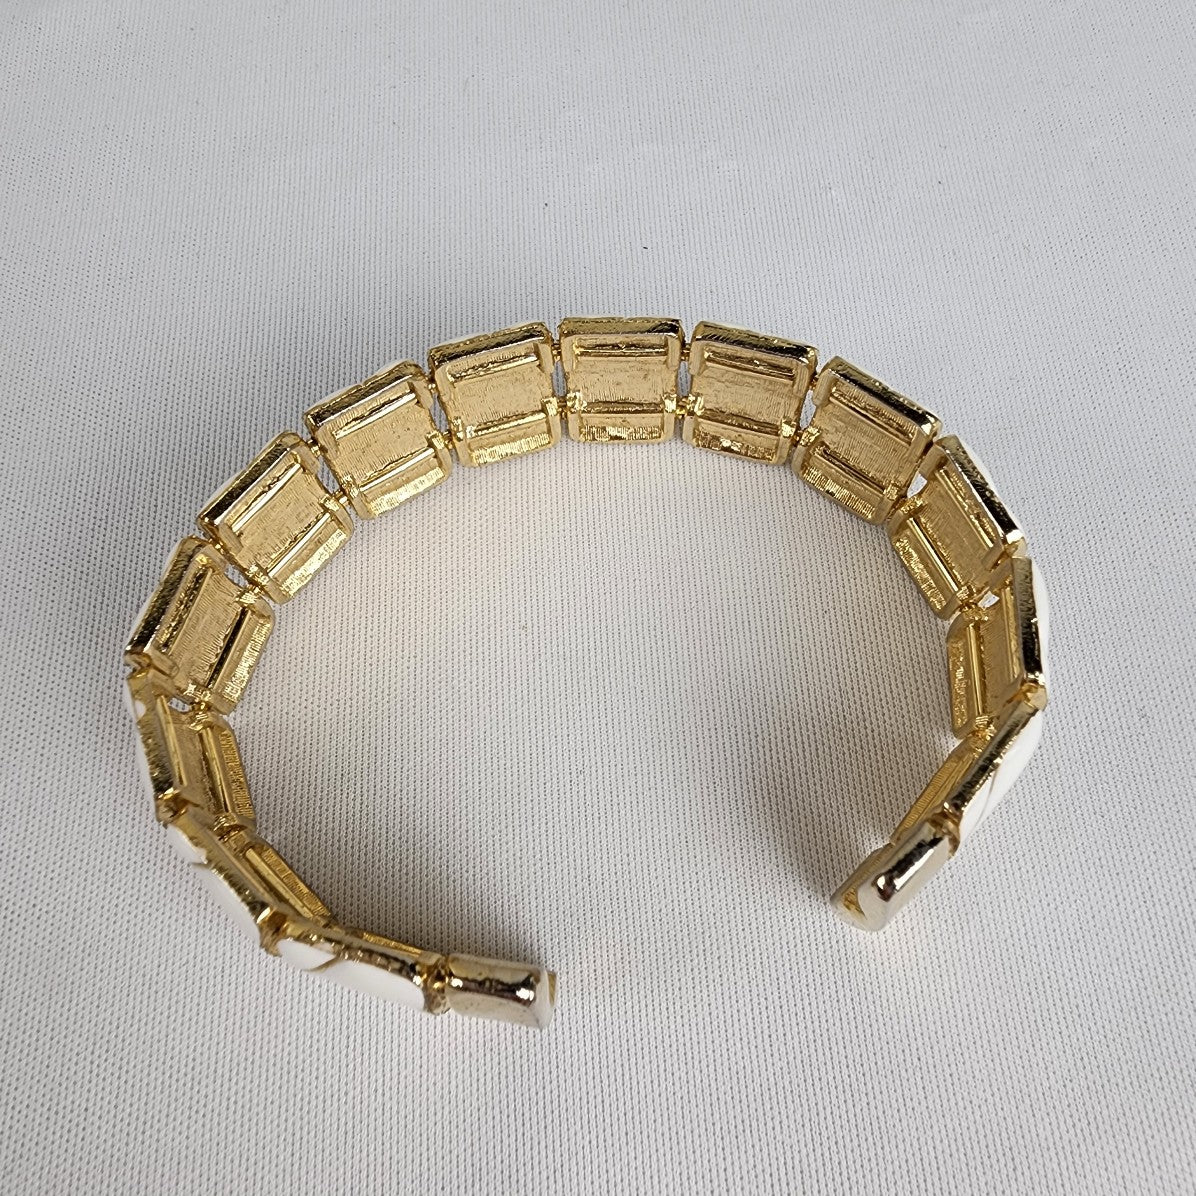 Vintage White Enamel Metal Cuff Bracelet